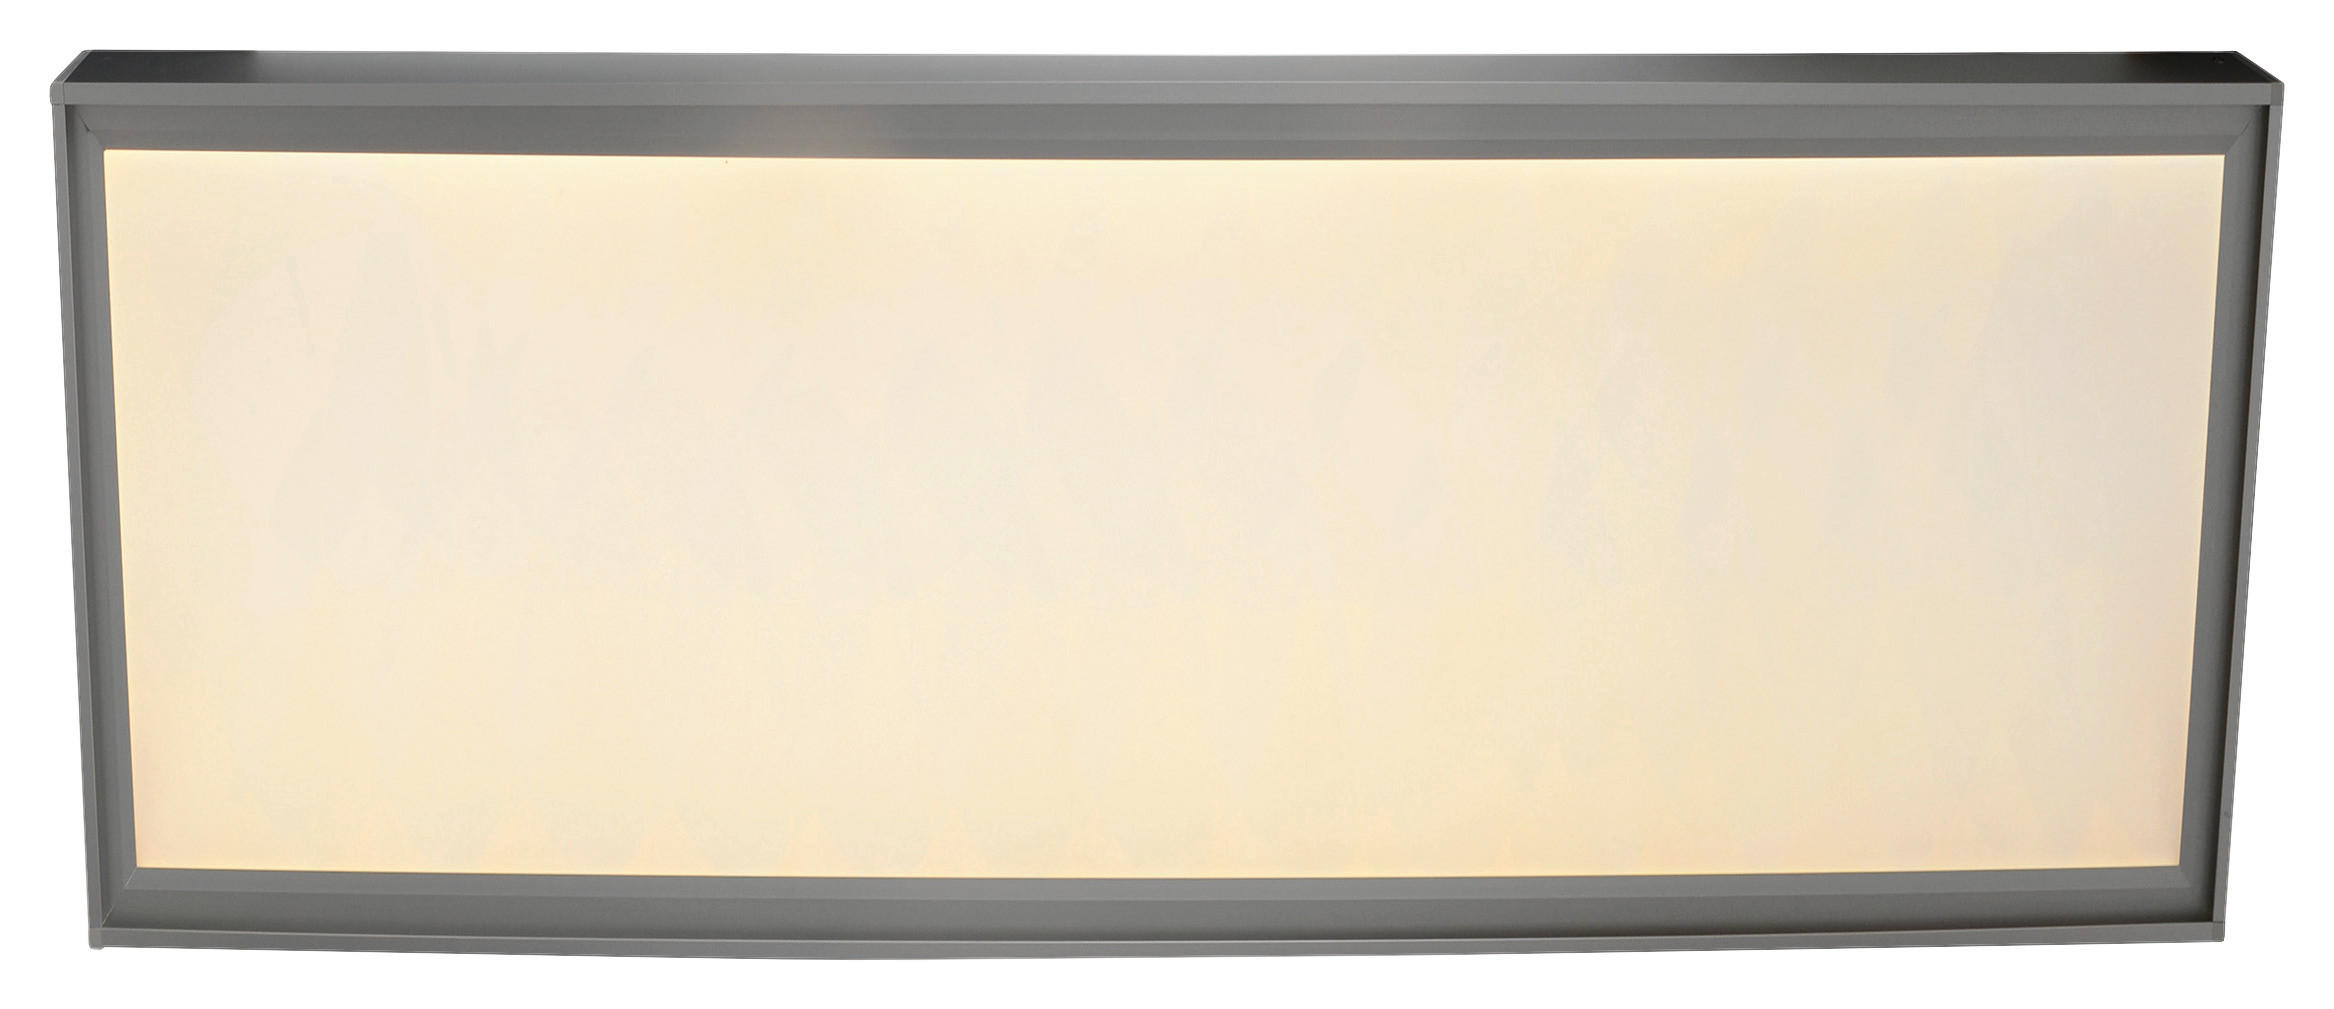 Näve Leuchten LED-Panel 1192026 Alu Metall Kunststoff B/H/T: ca. 29,5x1x59,5 cm 1 Brennstellen